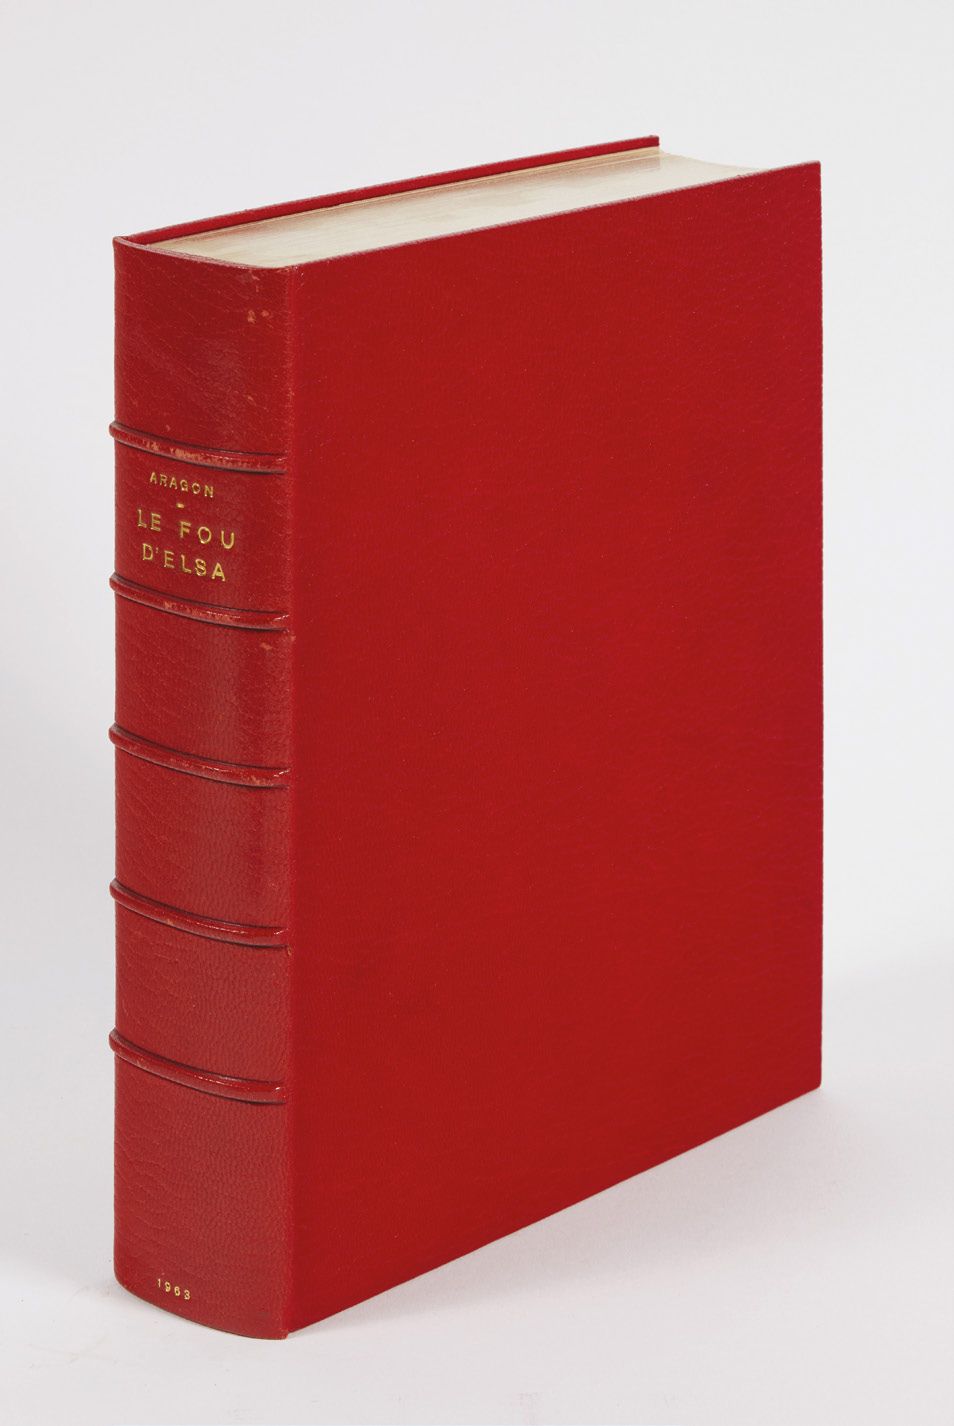 ARAGON, Louis. Le Fou d'Elsa, Gedichte. Paris, Gallimard, 1963; klein in-4 rotes&hellip;